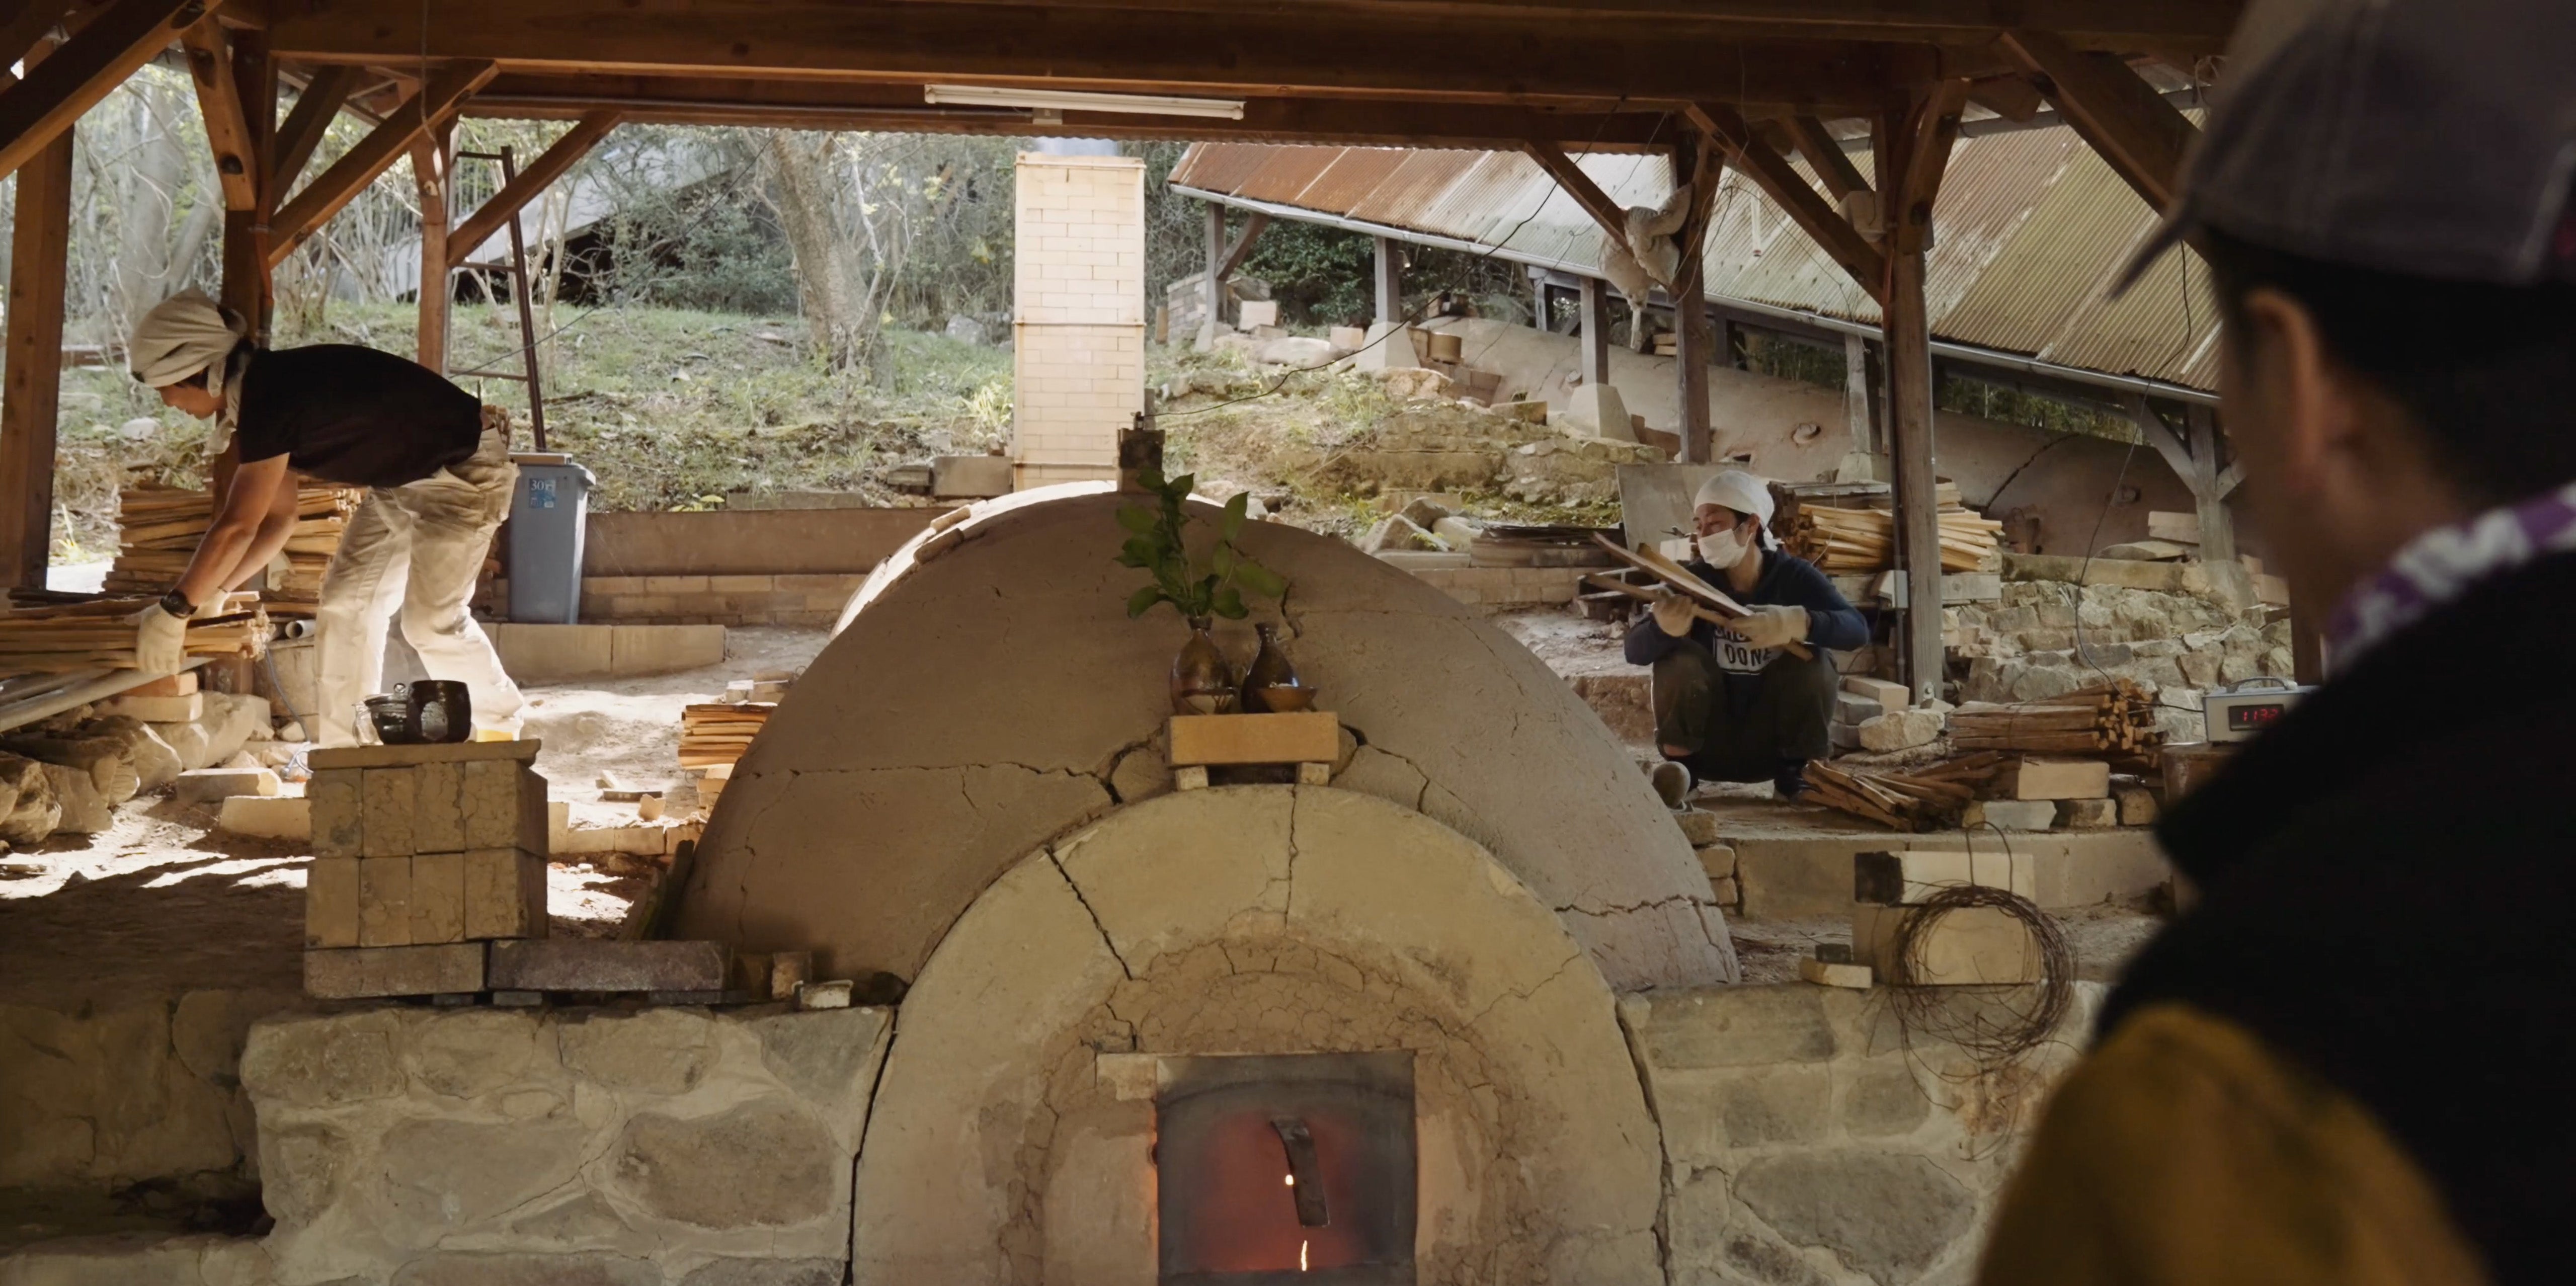 Koichiro Isezaki and colleagues and his wood firing kiln